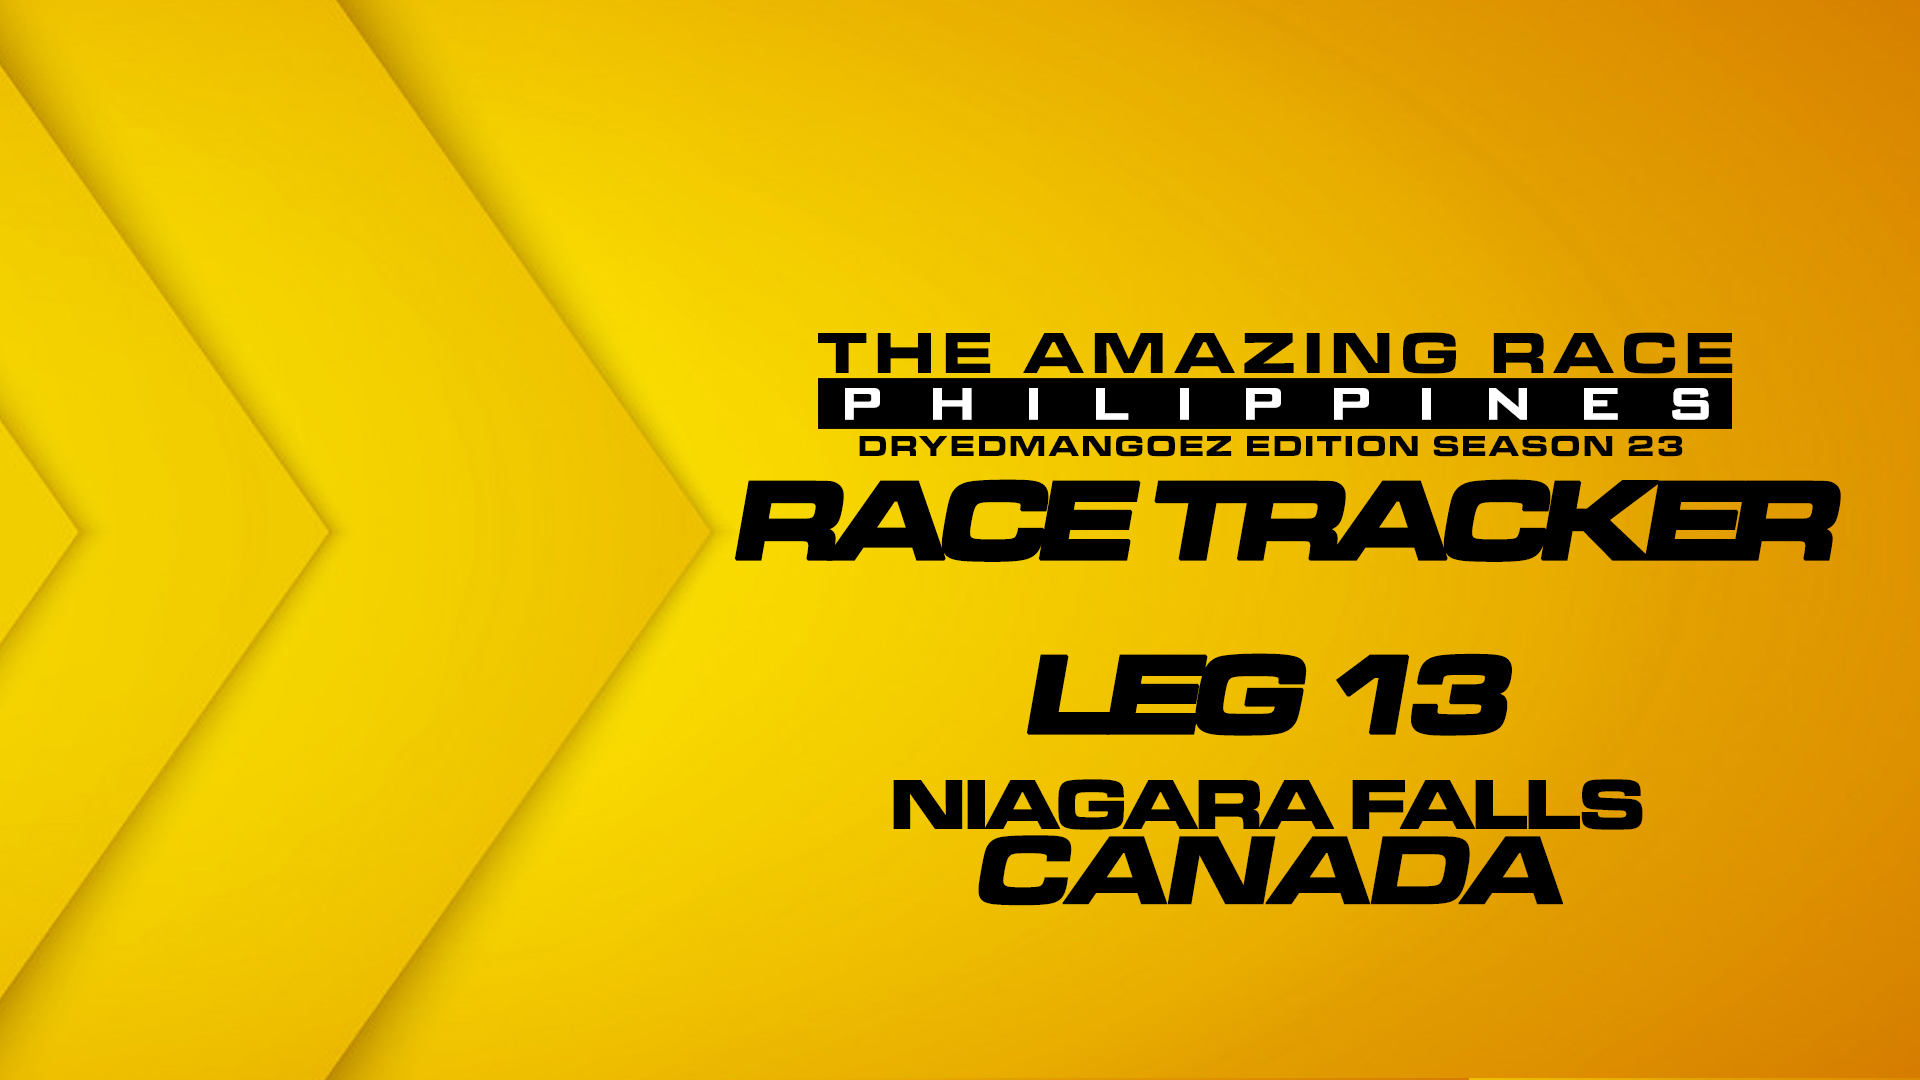 The Amazing Race Philippines: DryedMangoez Edition Season 23 Race Tracker – Leg 13